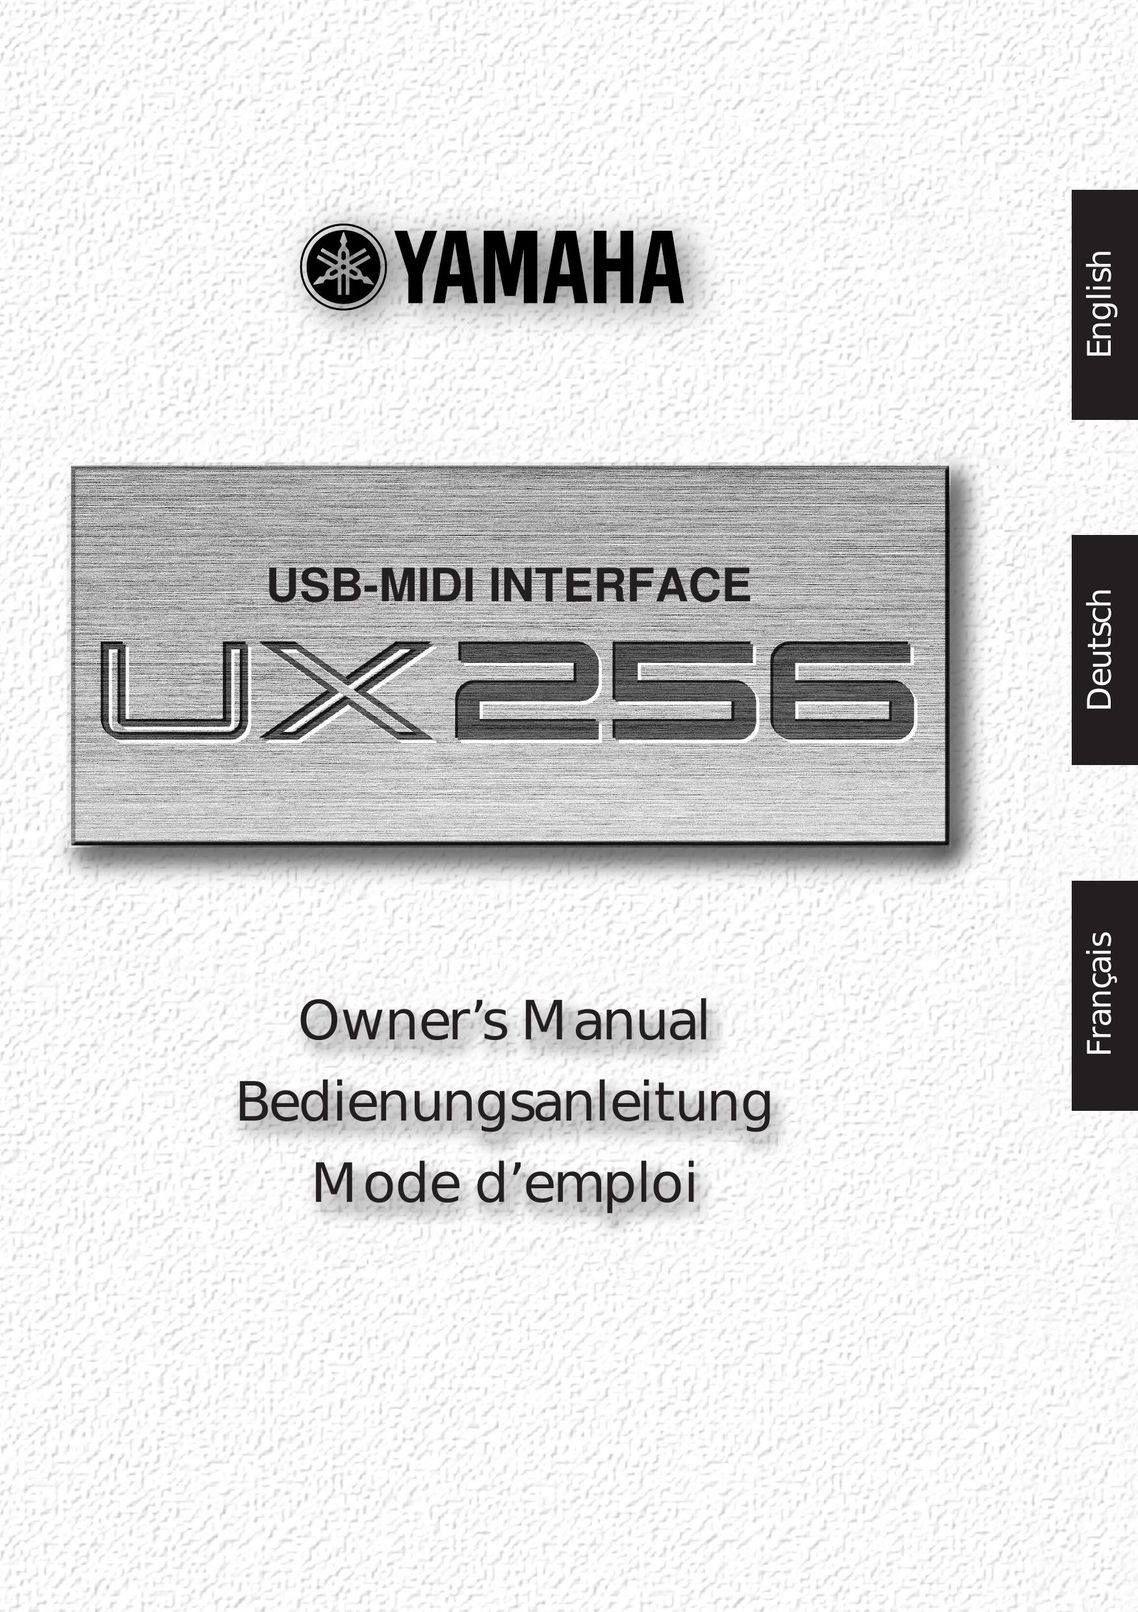 Yamaha UX256 Home Theater Server User Manual